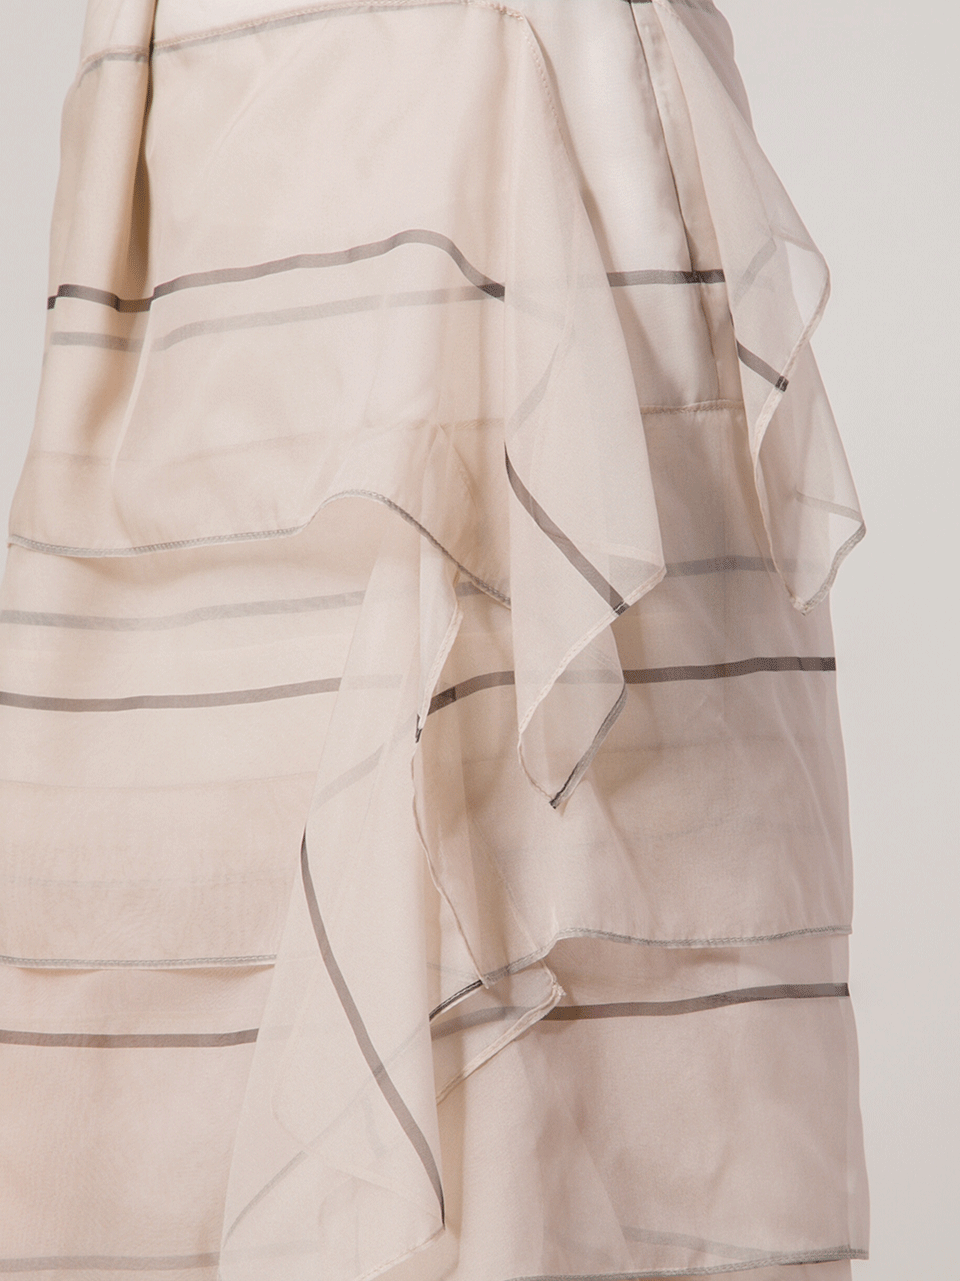 Layered Stripe Skirt CLOTHINGSKIRTMISC BRUNELLO CUCINELLI   